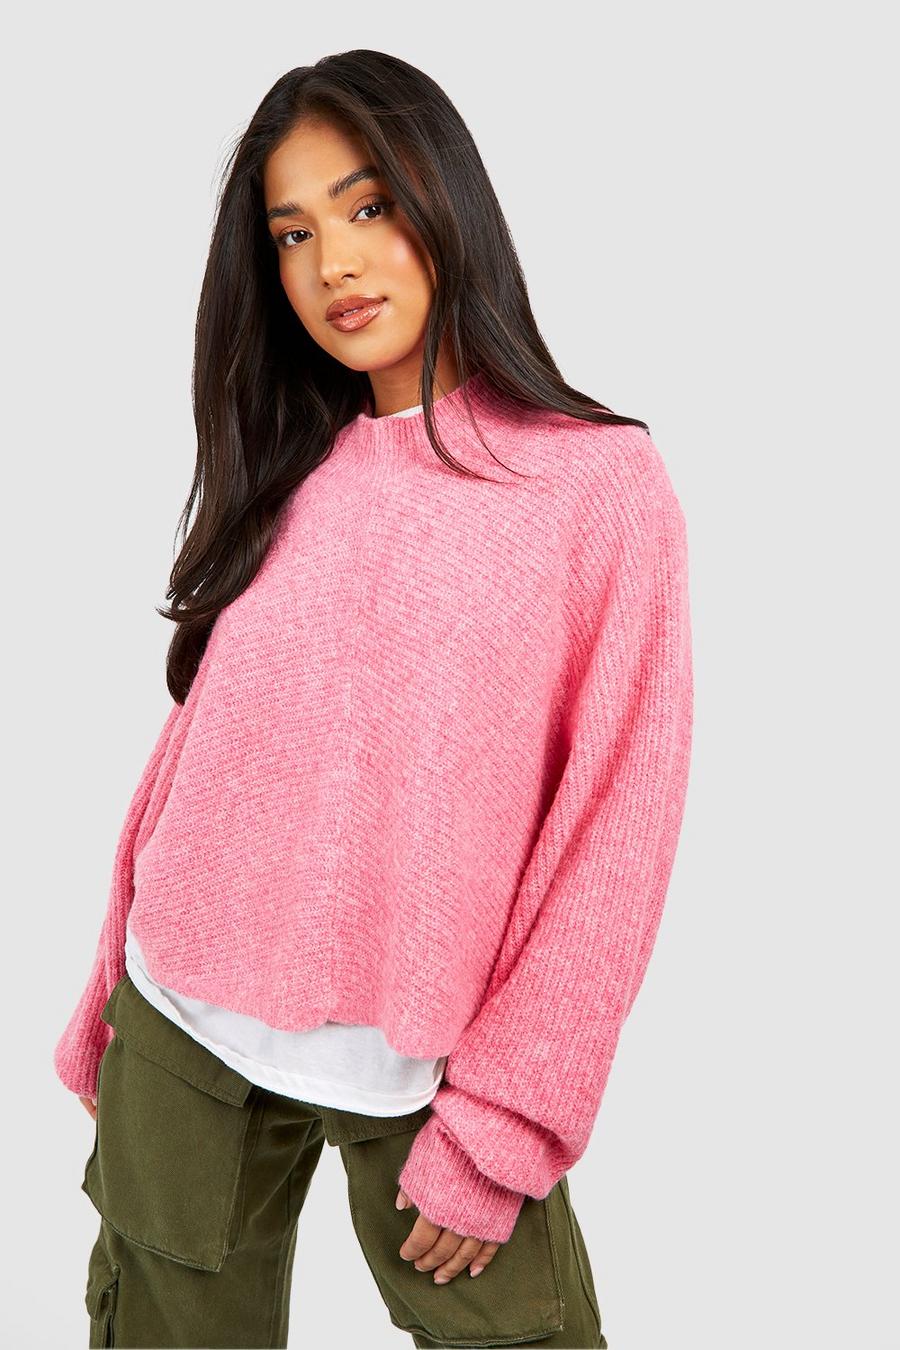 Petite hochgeschlossener Strick-Pullover mit Chevron-Muster, Hot pink